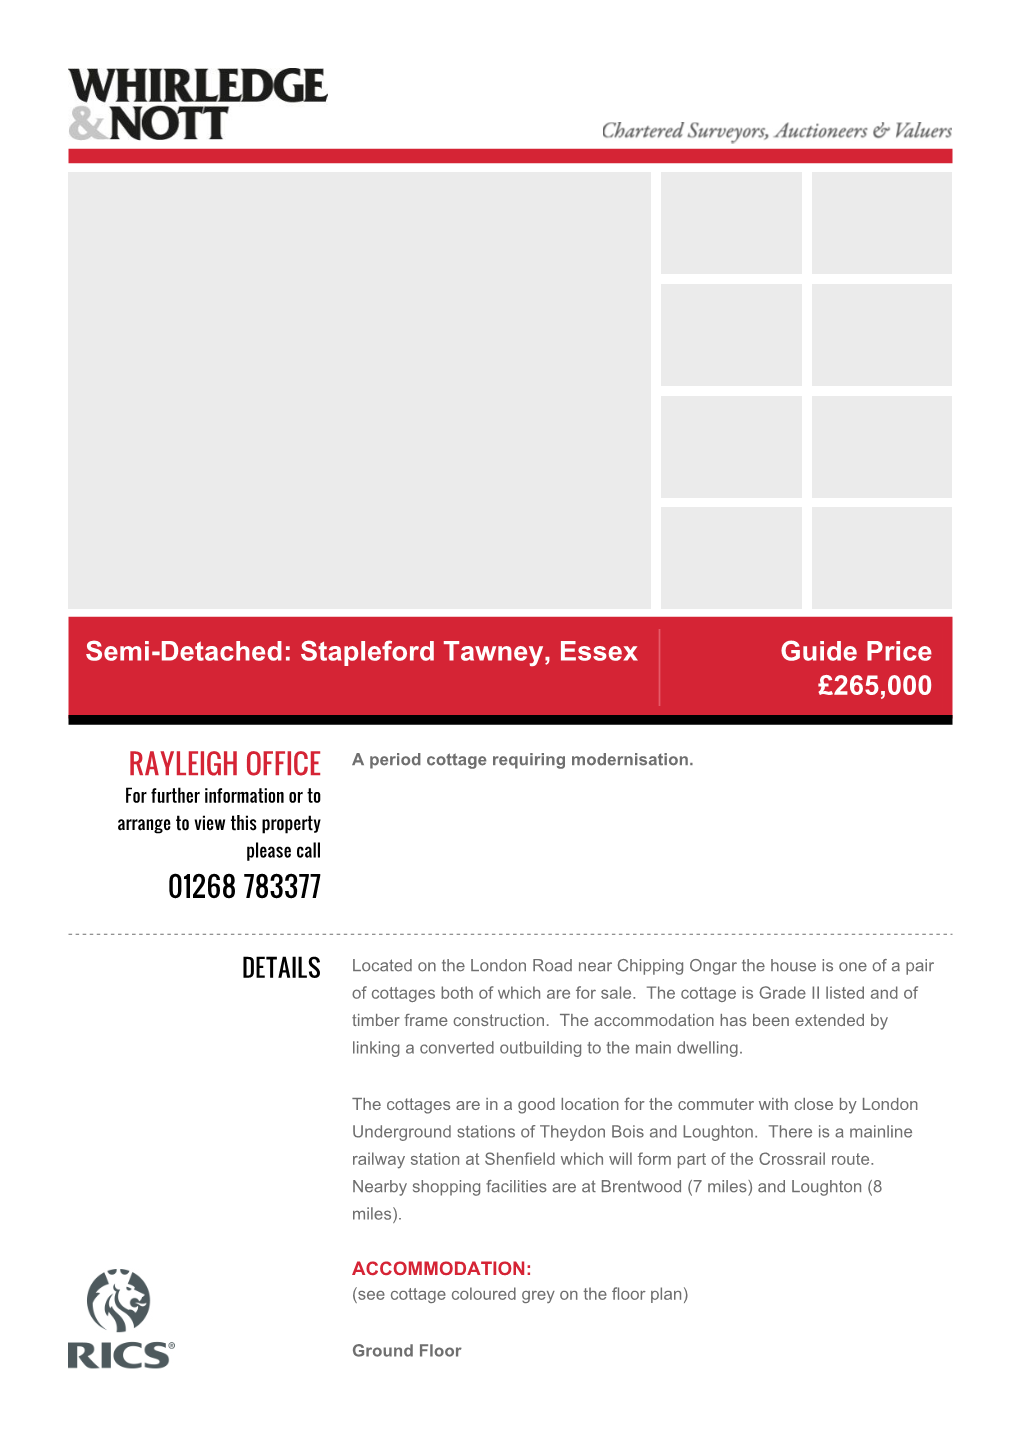 Semi-Detached: Stapleford Tawney, Essex Guide Price £265,000